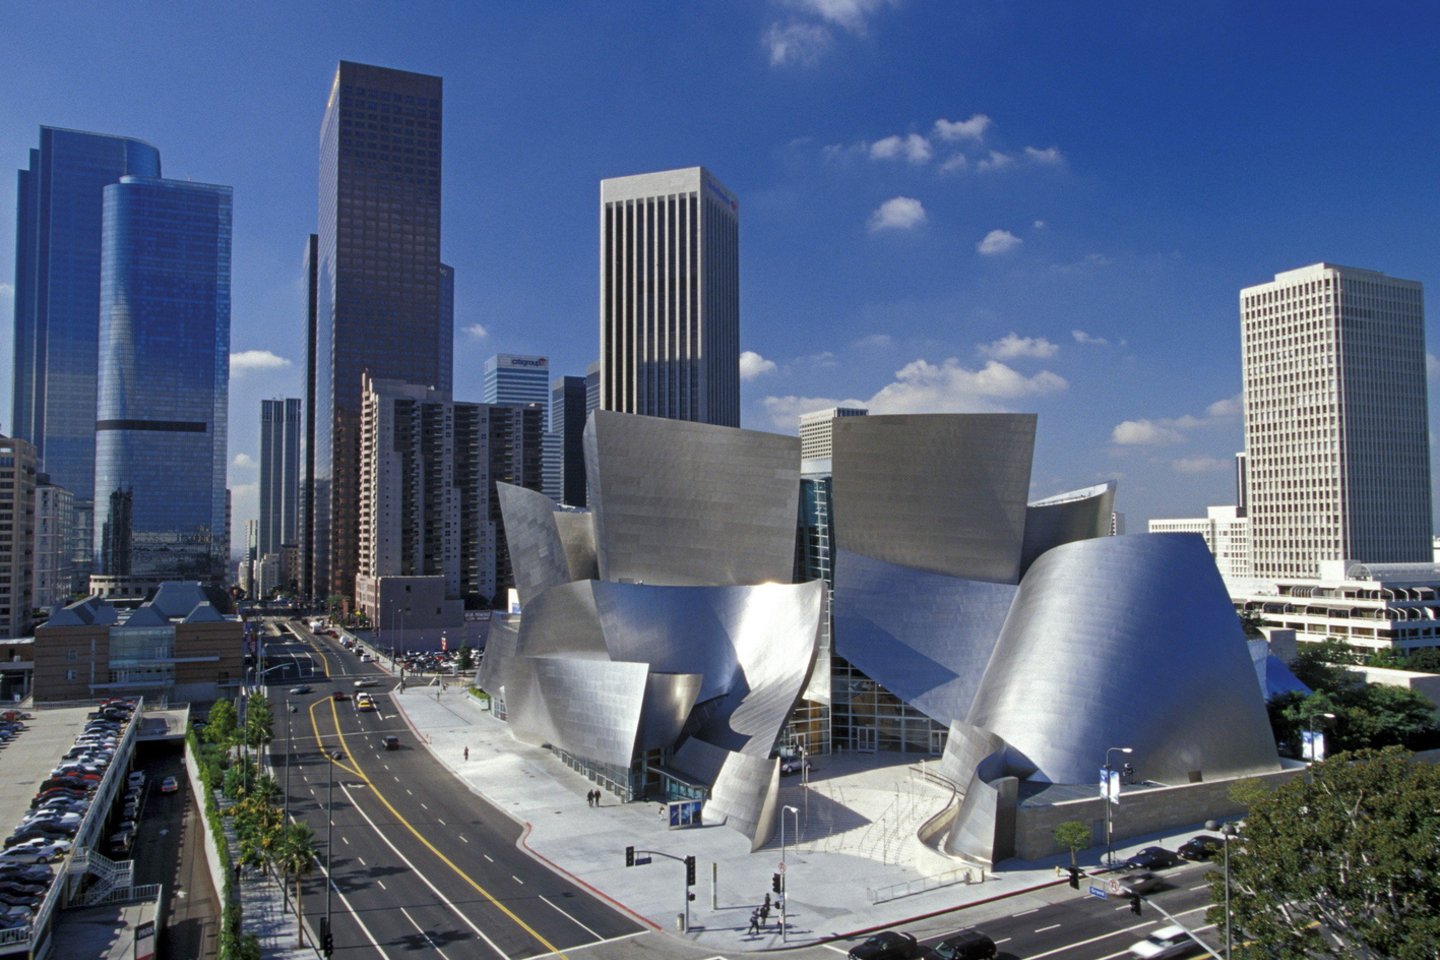  Walto Disney koncertų salė.<br>Gehry Partners/archdaily.com nuotr.